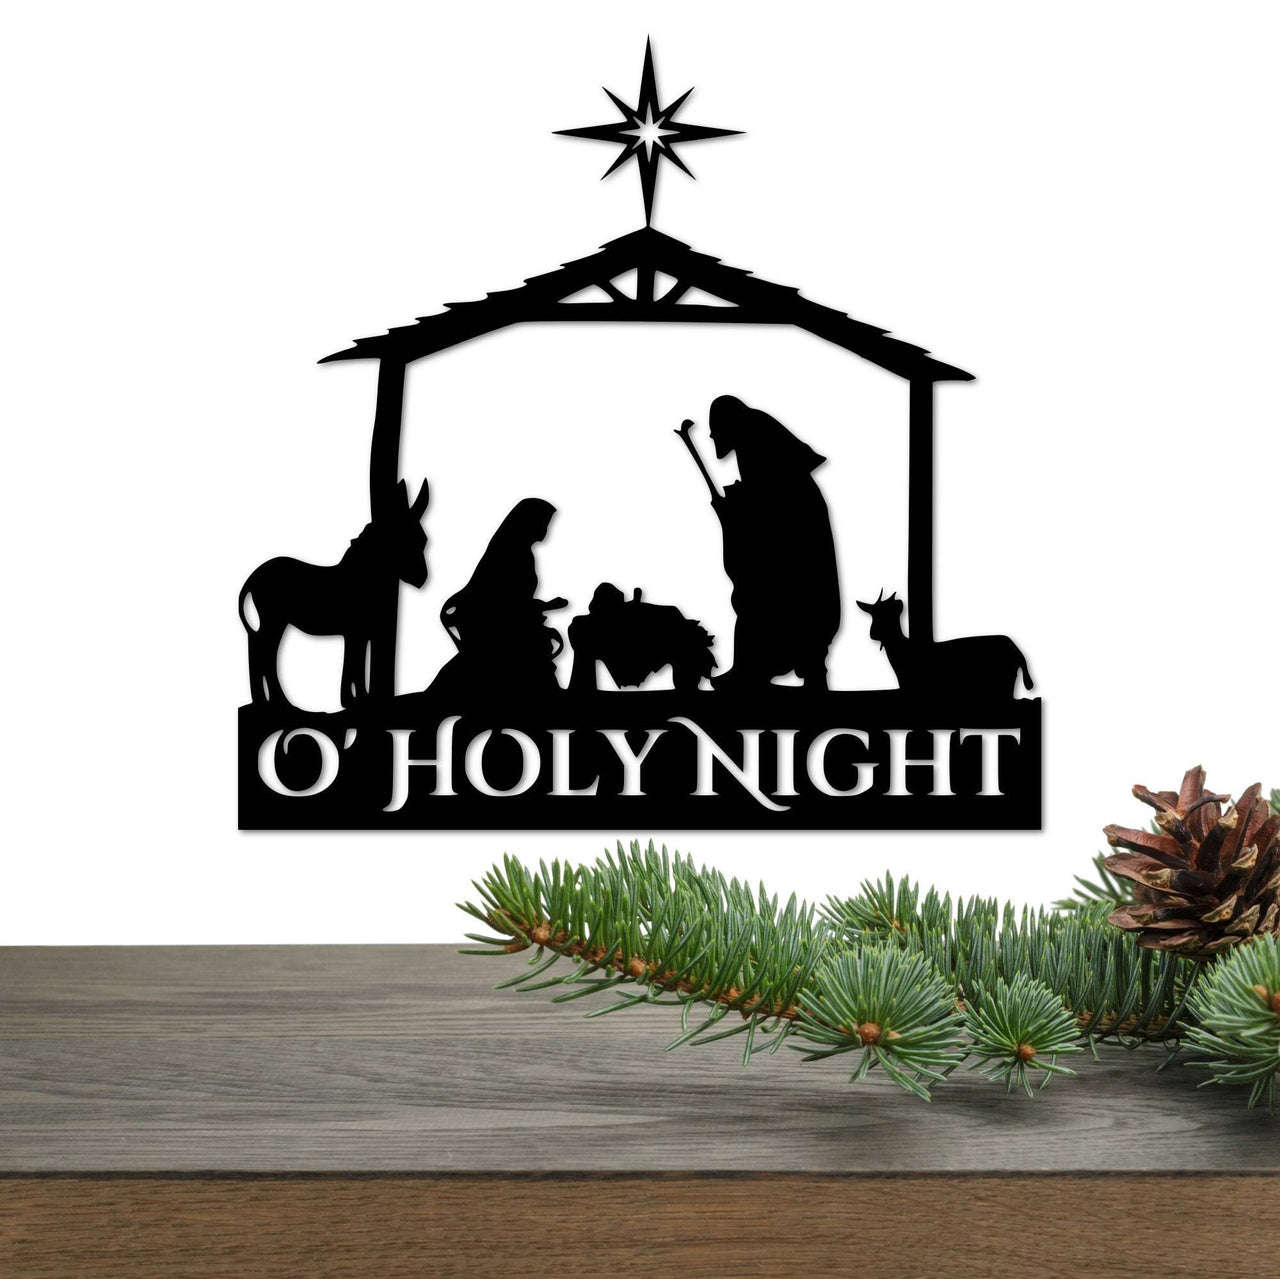 Metal Nativity Scene Wall Art | O' Holy Night Christmas Sign | Inspirational Words Wall Hanging | Holiday Decor | Religious Metal Art Gift